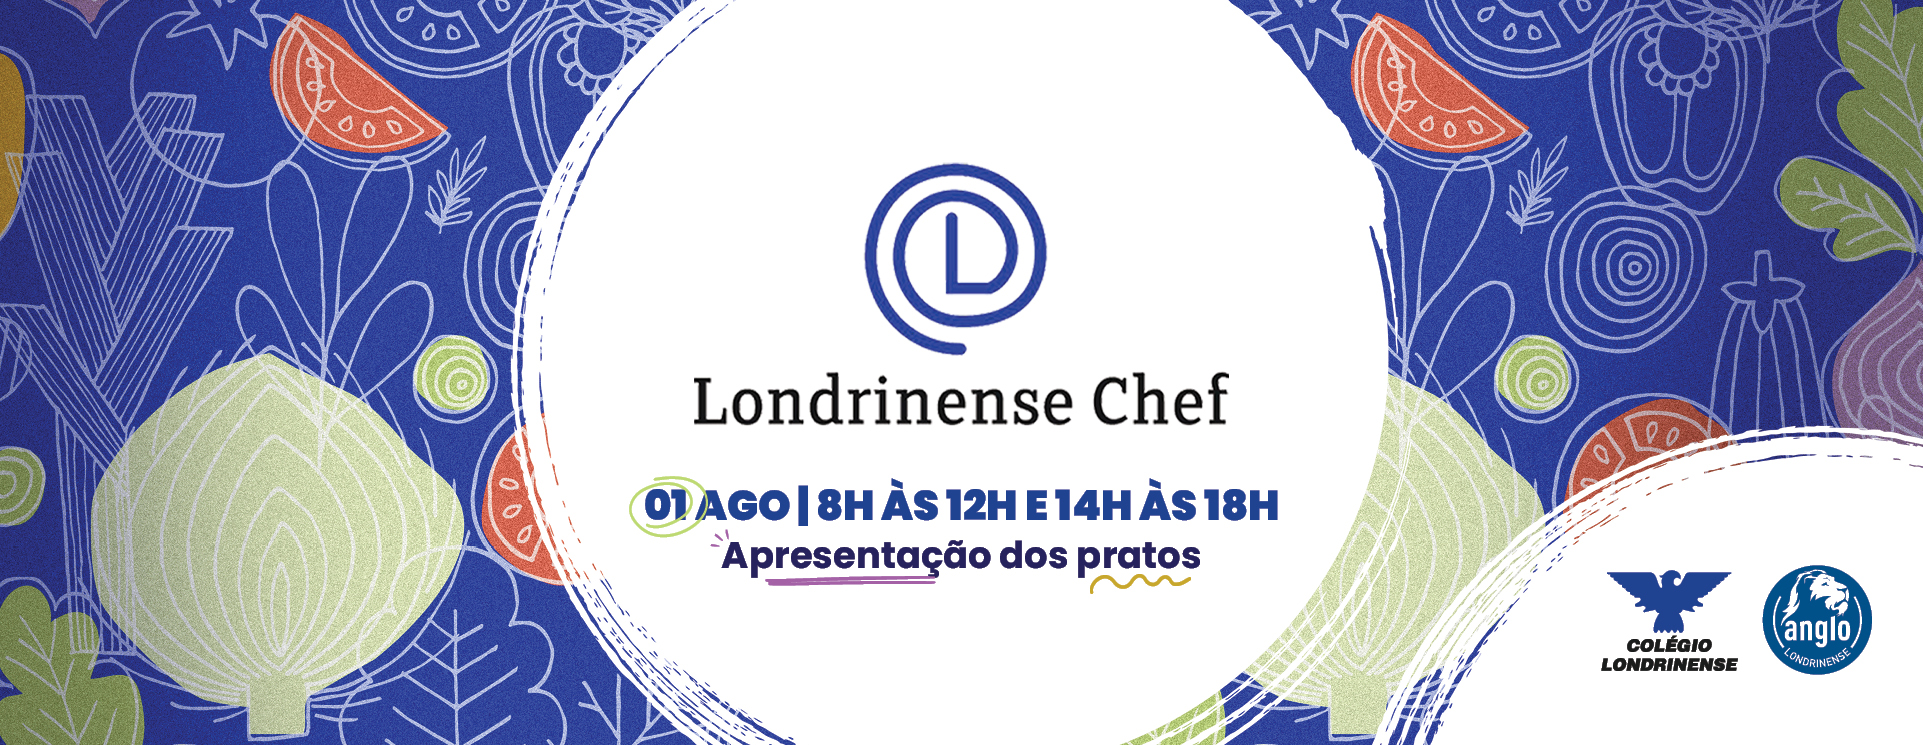 Londrinense Chef